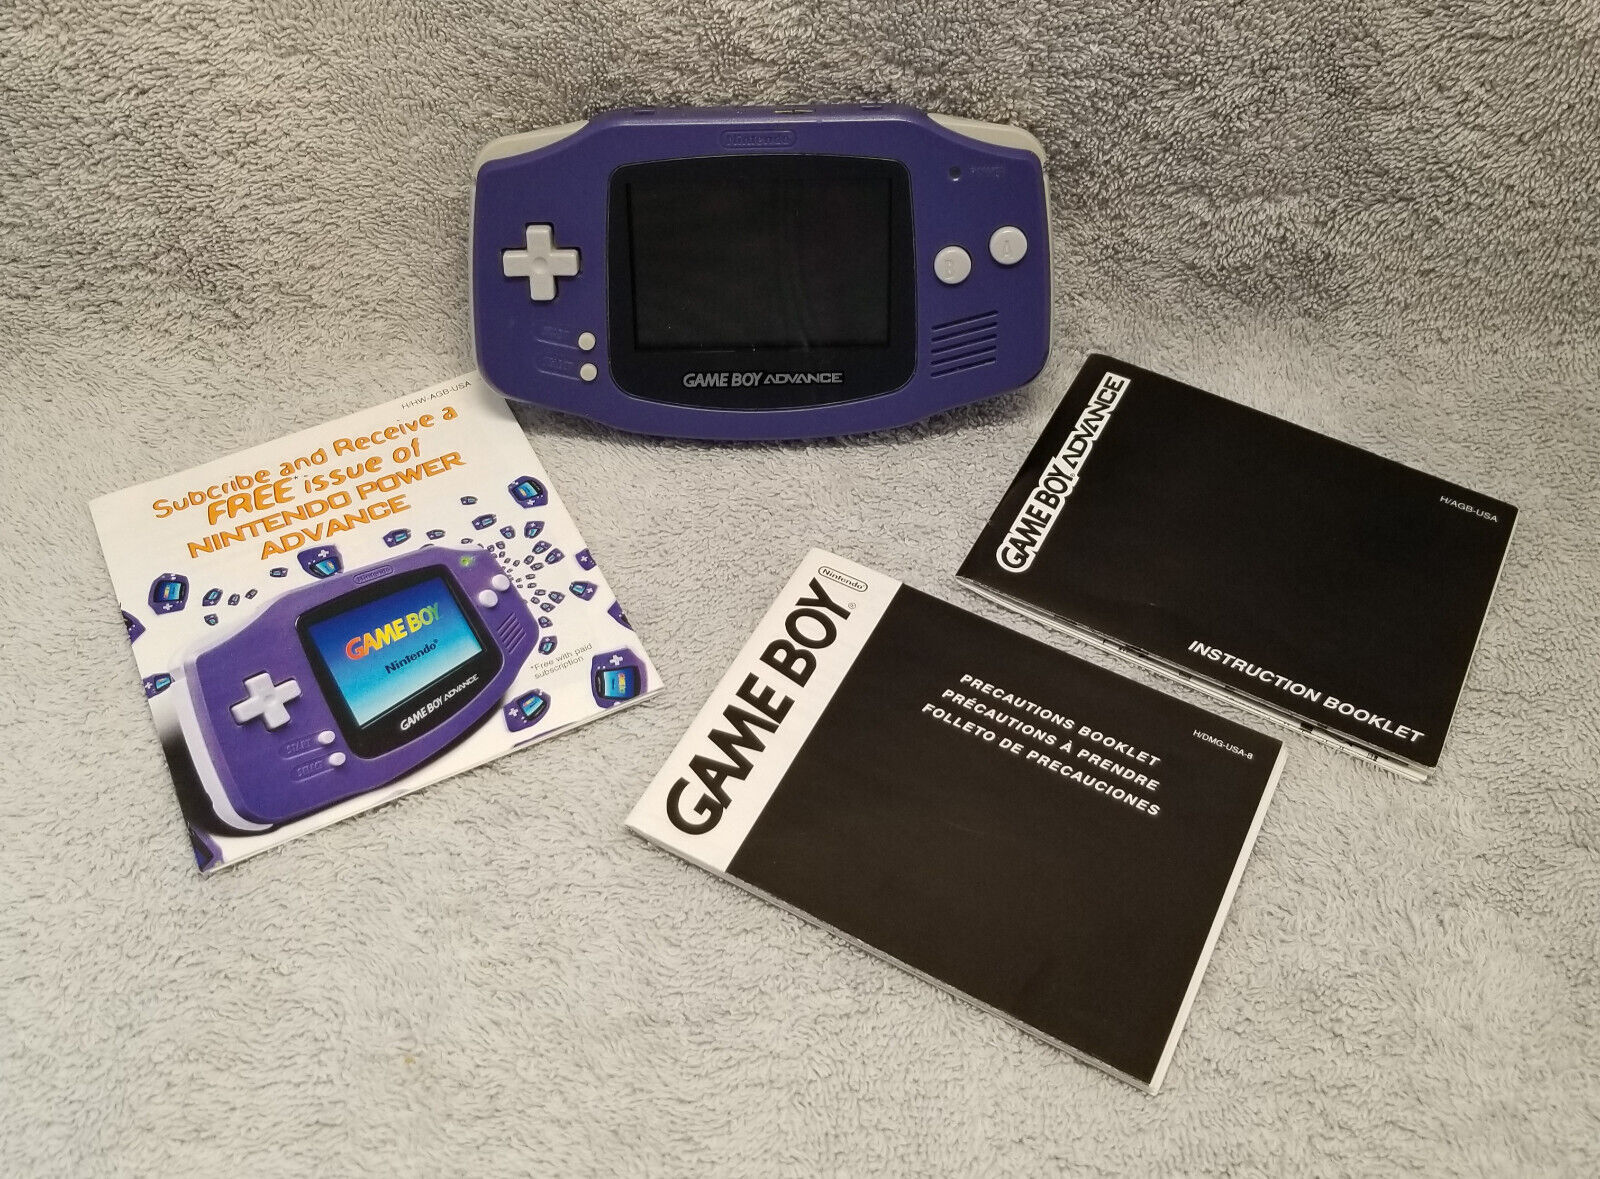 Nintendo Game Boy Advance GBA Handheld System - Indigo - Complete CIB - Tested - $149.95